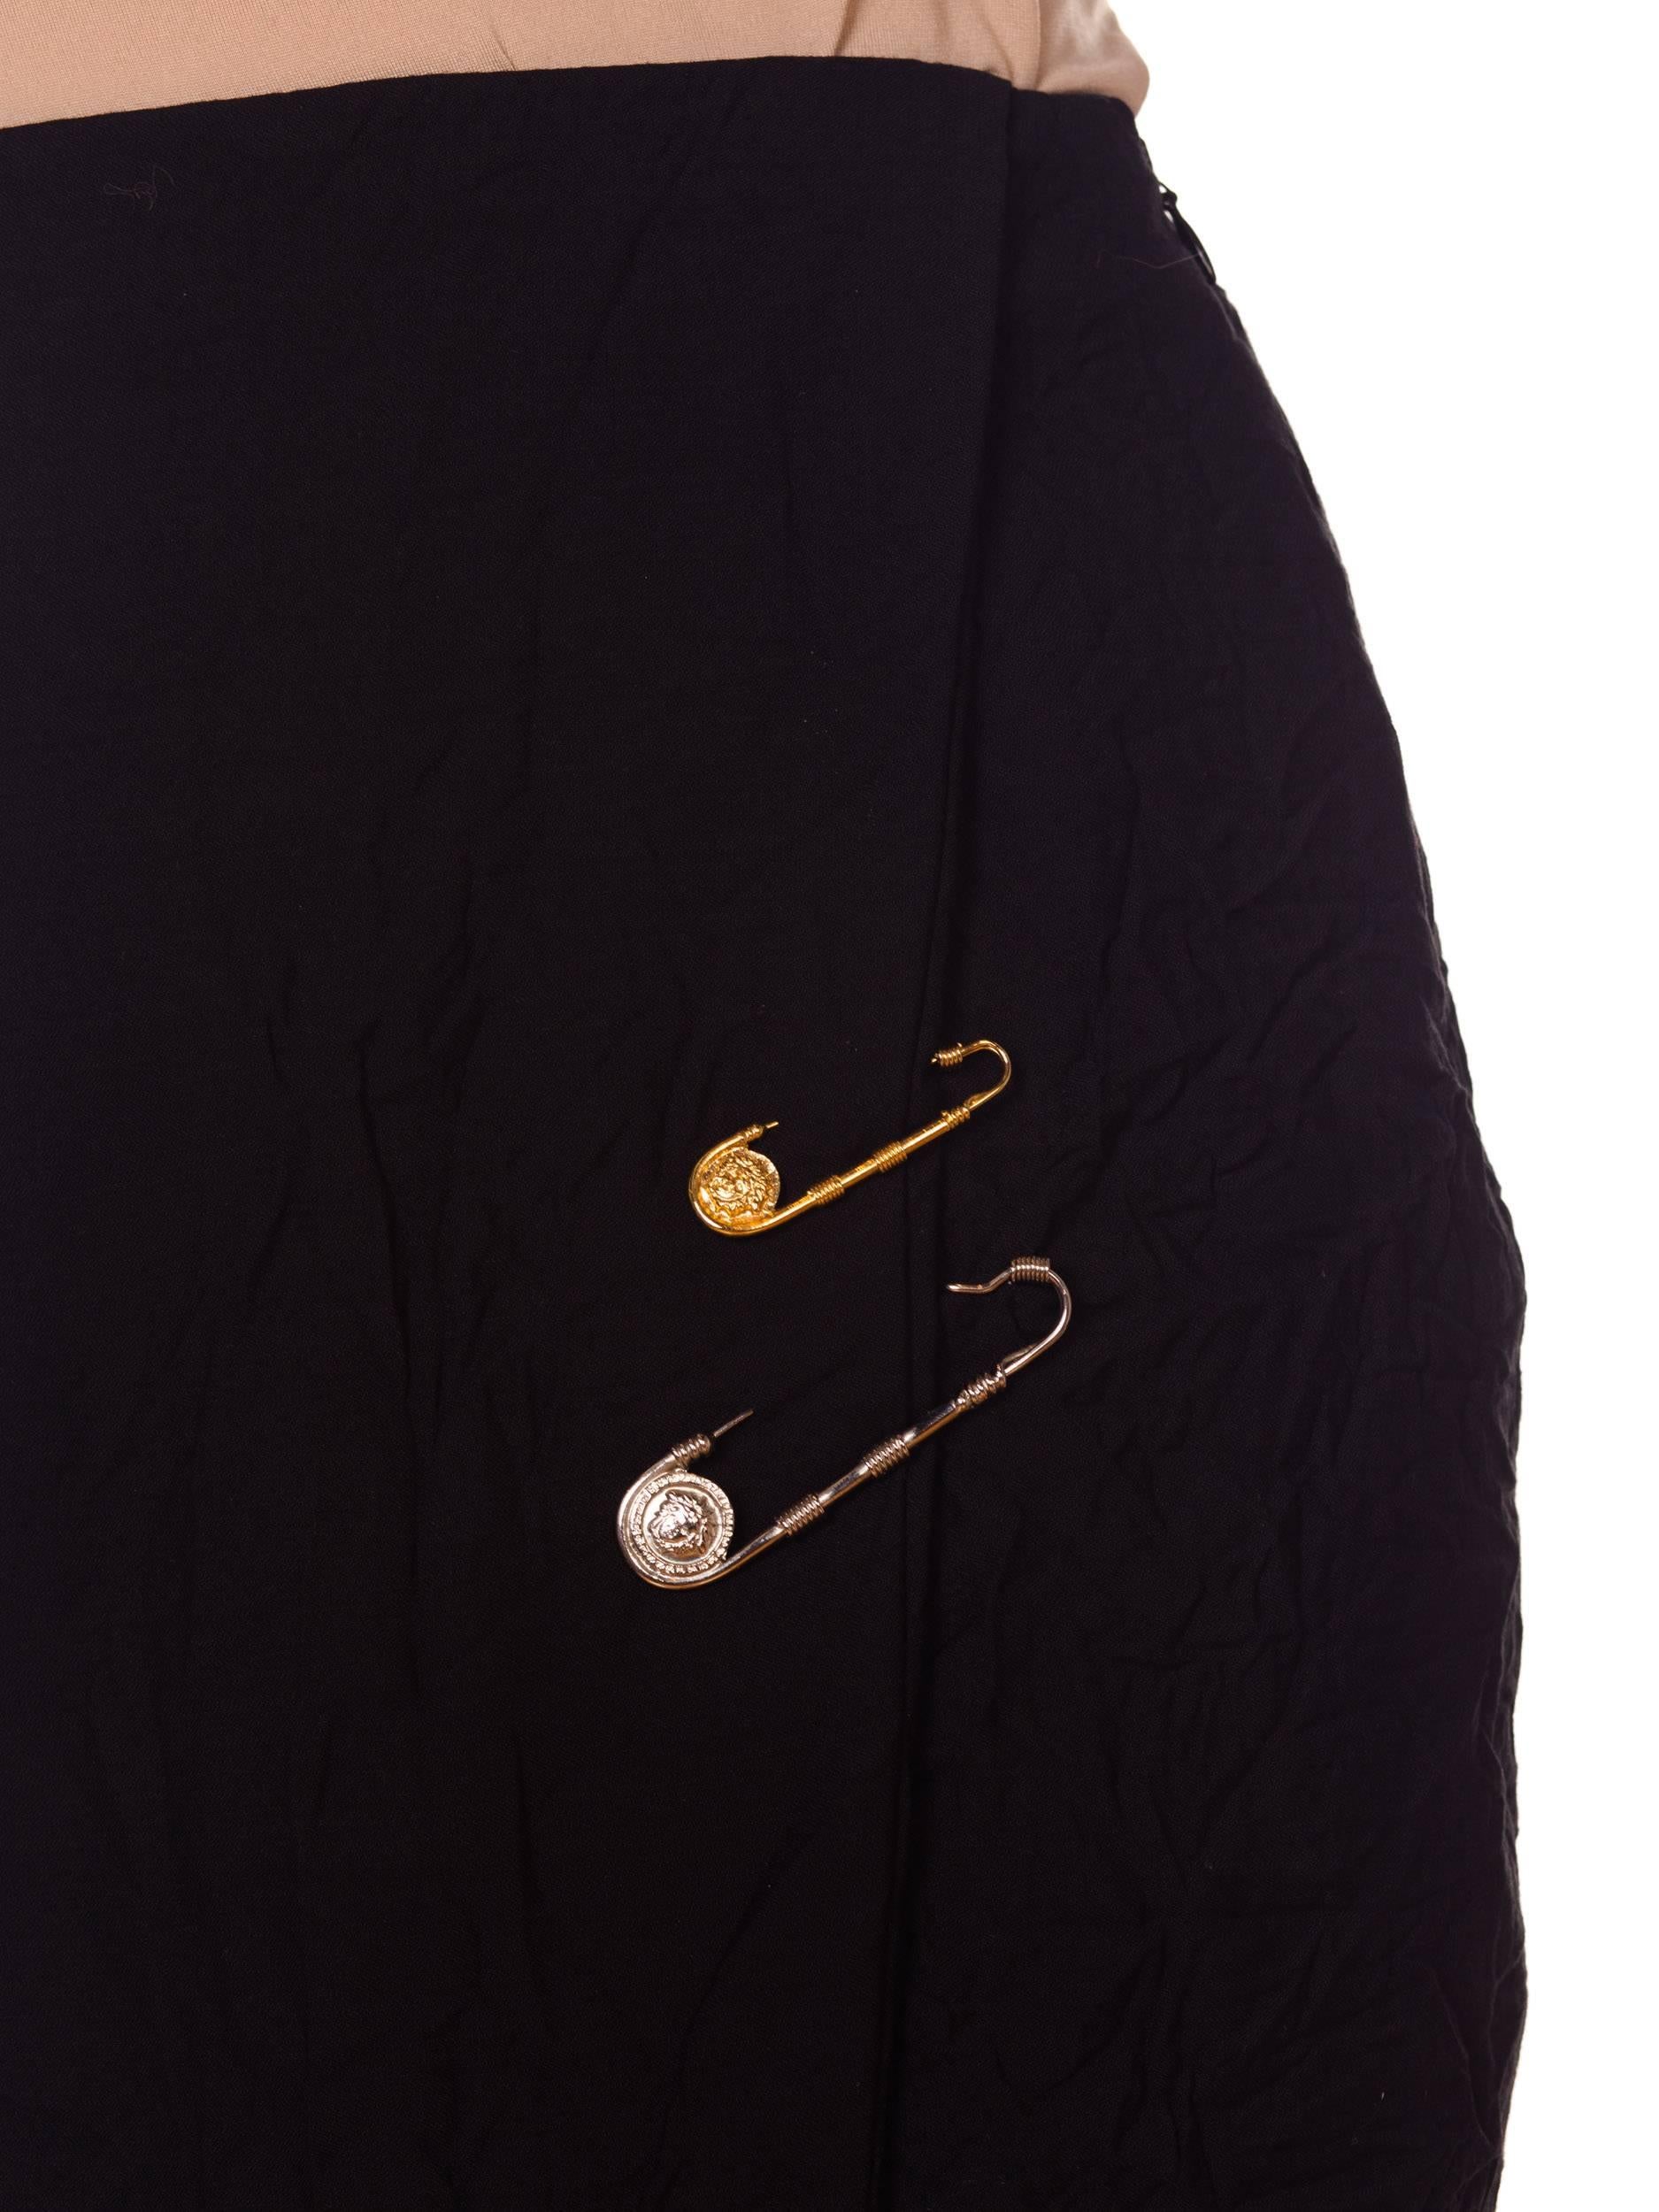 Gianni Versace Medusa Head Safety Pin Skirt, 1990s  1